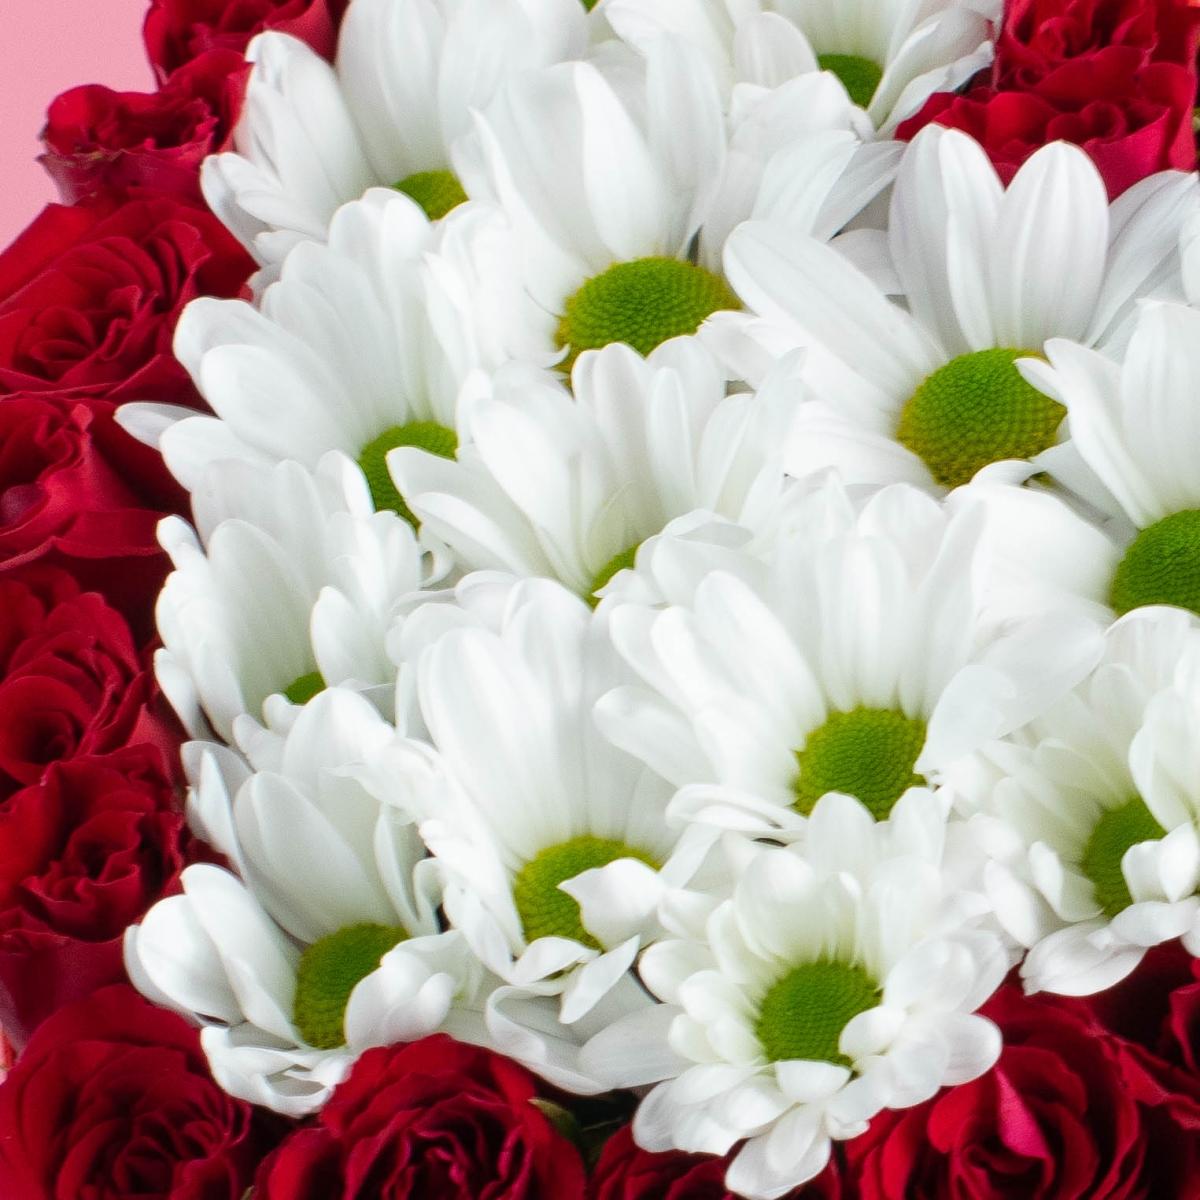 Белая хризантема с розами в коробке-сердце